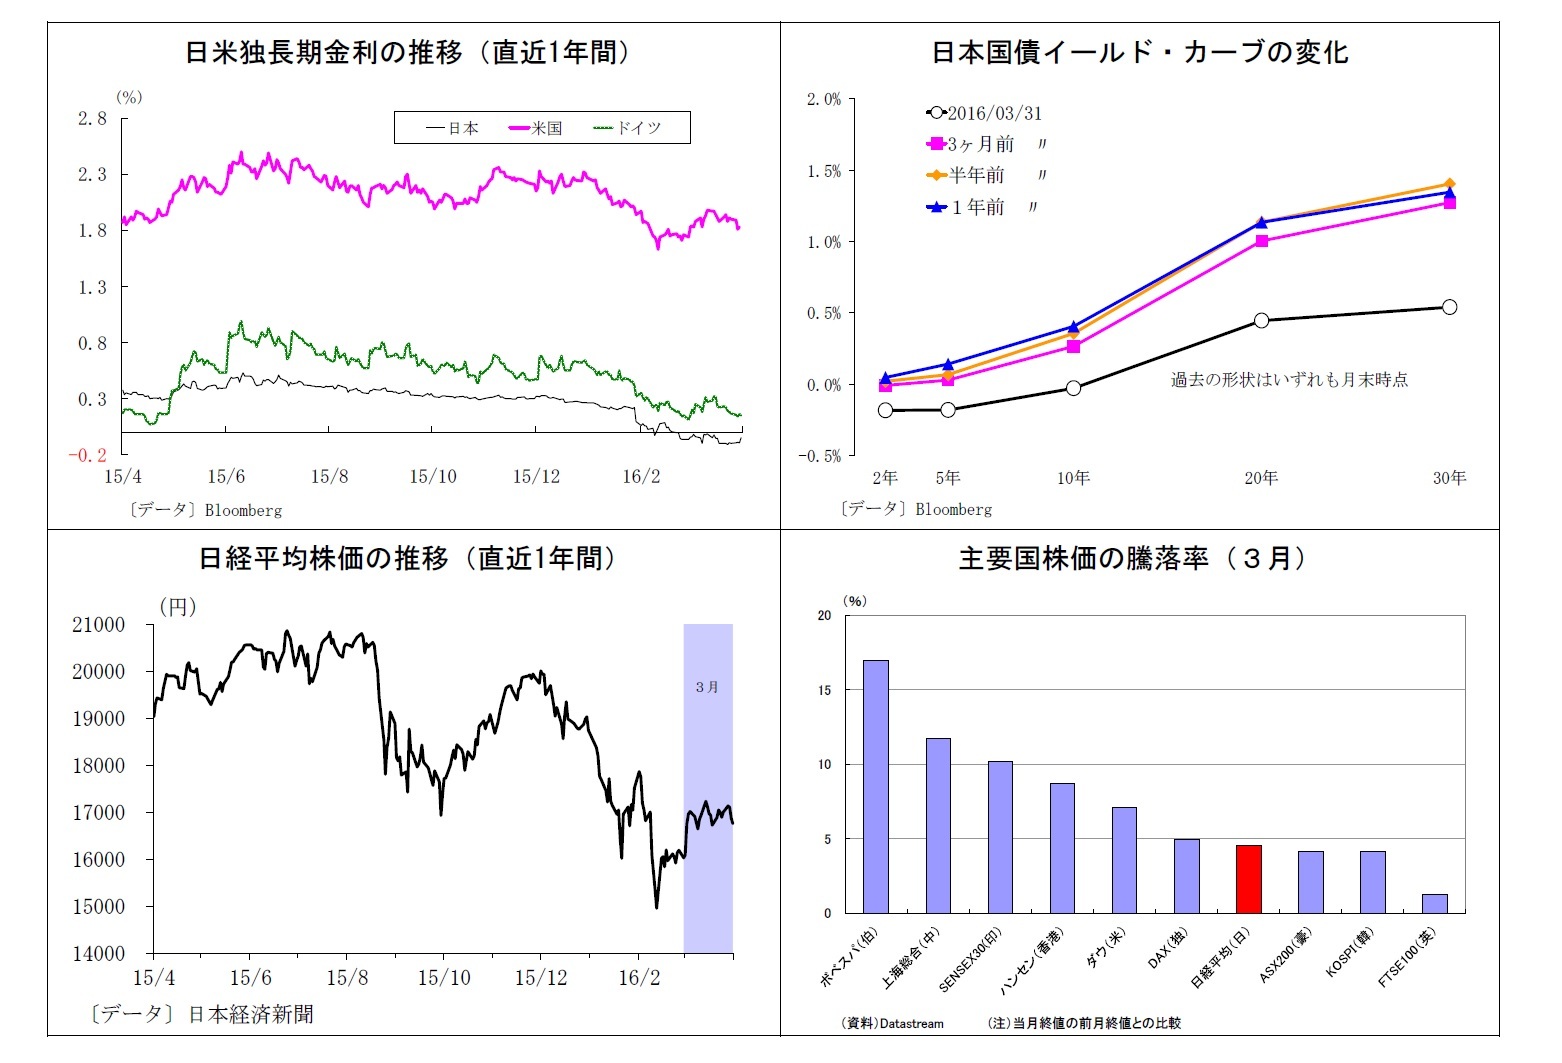 日米独長期金利の推移（直近1年間）/日本国債イールド・カーブの変化/日経平均株価の推移（直近1年間）/主要国株価の騰落率（３月）